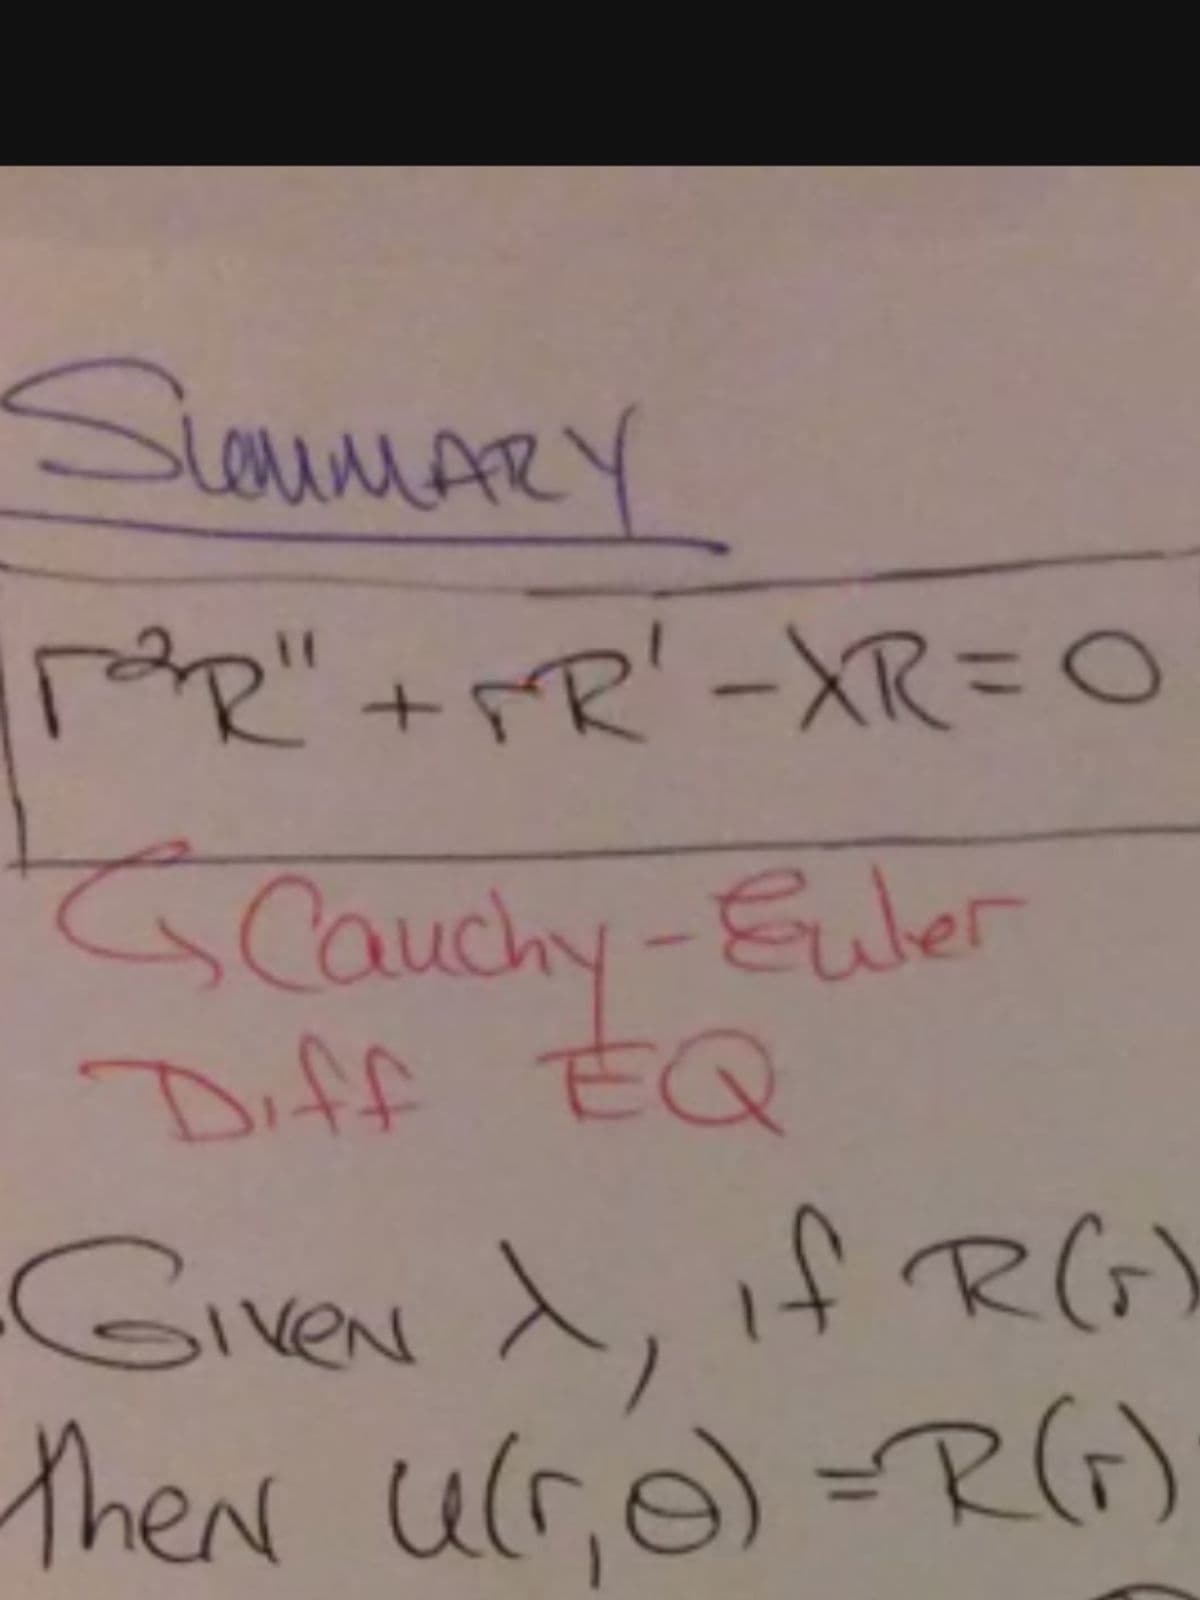 SomARY
p"+FR'-XR=D0
Cauchy-Euler
Diff EQ
GiveN X, if R(G
theN ur,e)=RG)
